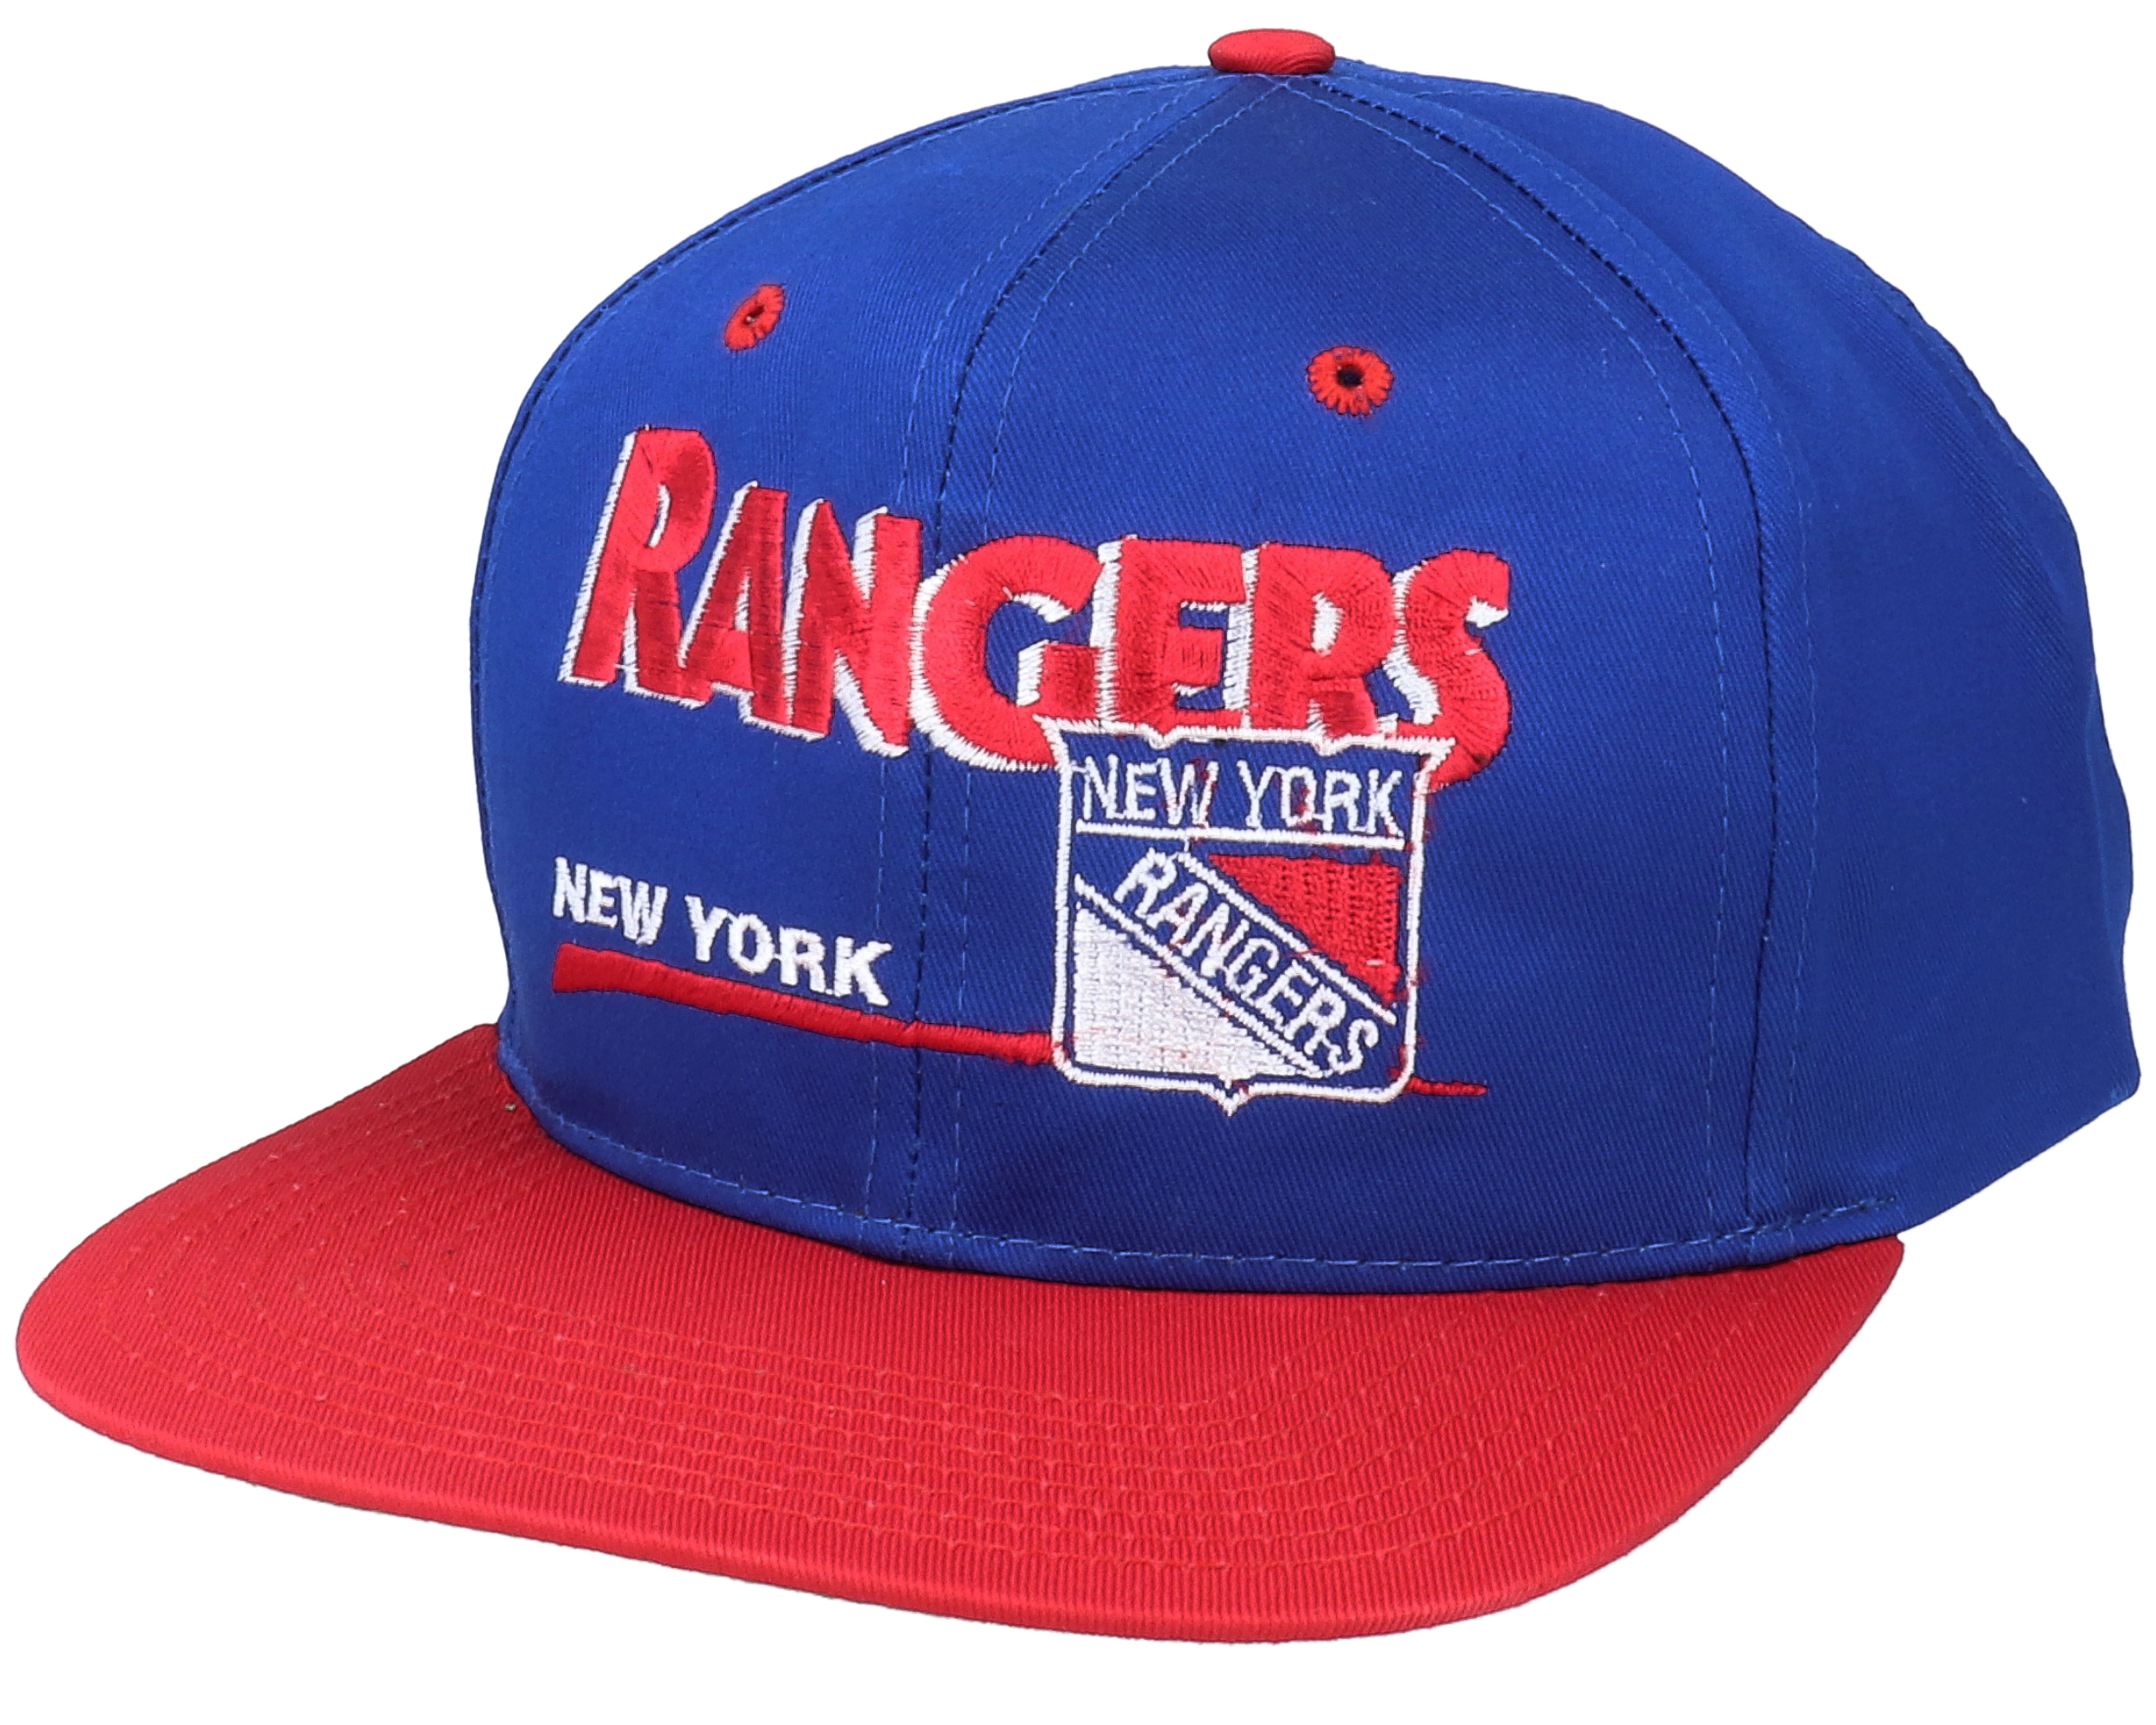 New York Rangers Cap Vintage